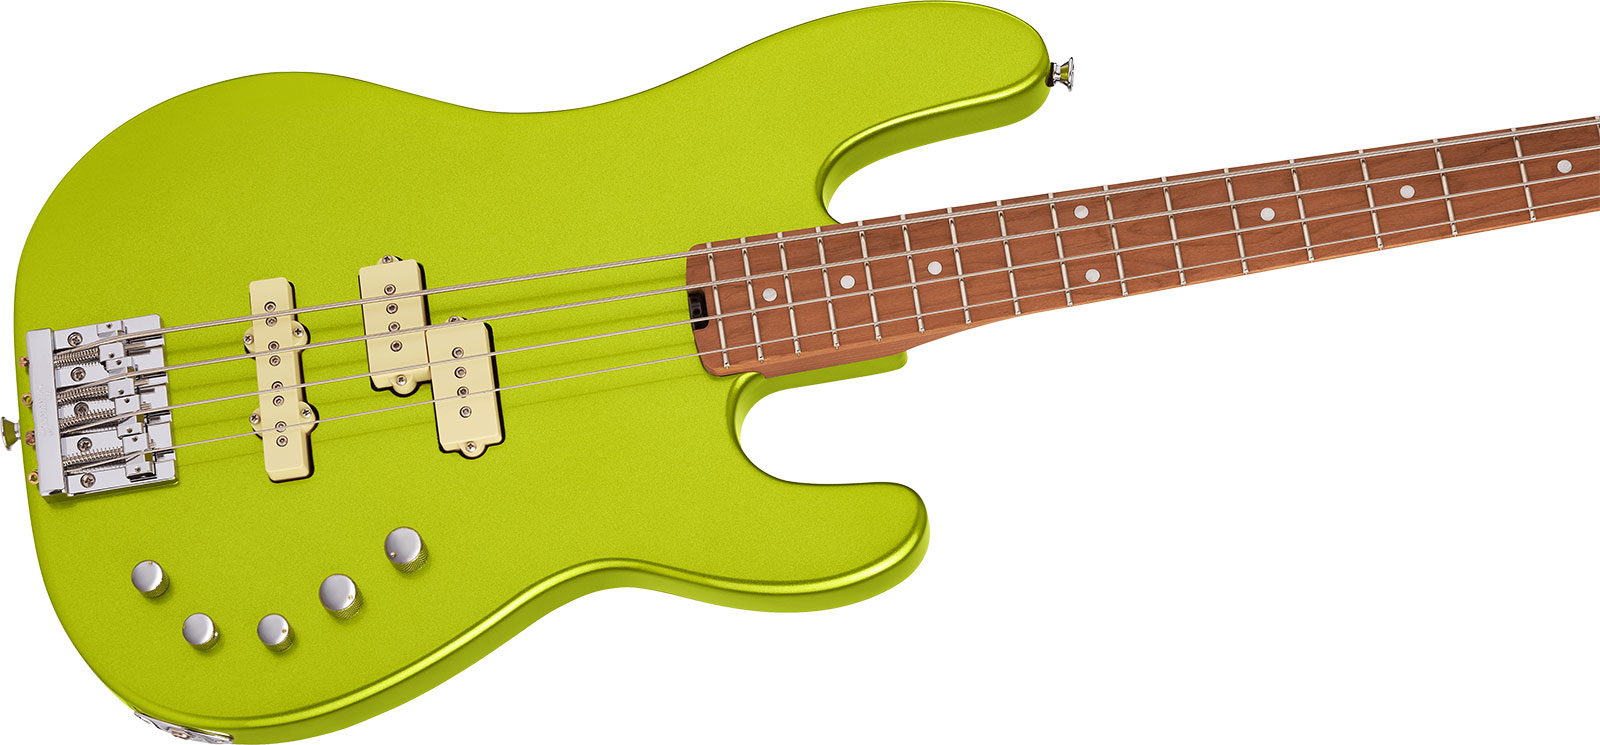 Charvel San Dimas Bass Pj Iv Pro-mod Mex 4c Active Mn - Lime Green Metallic - Solid body electric bass - Variation 2